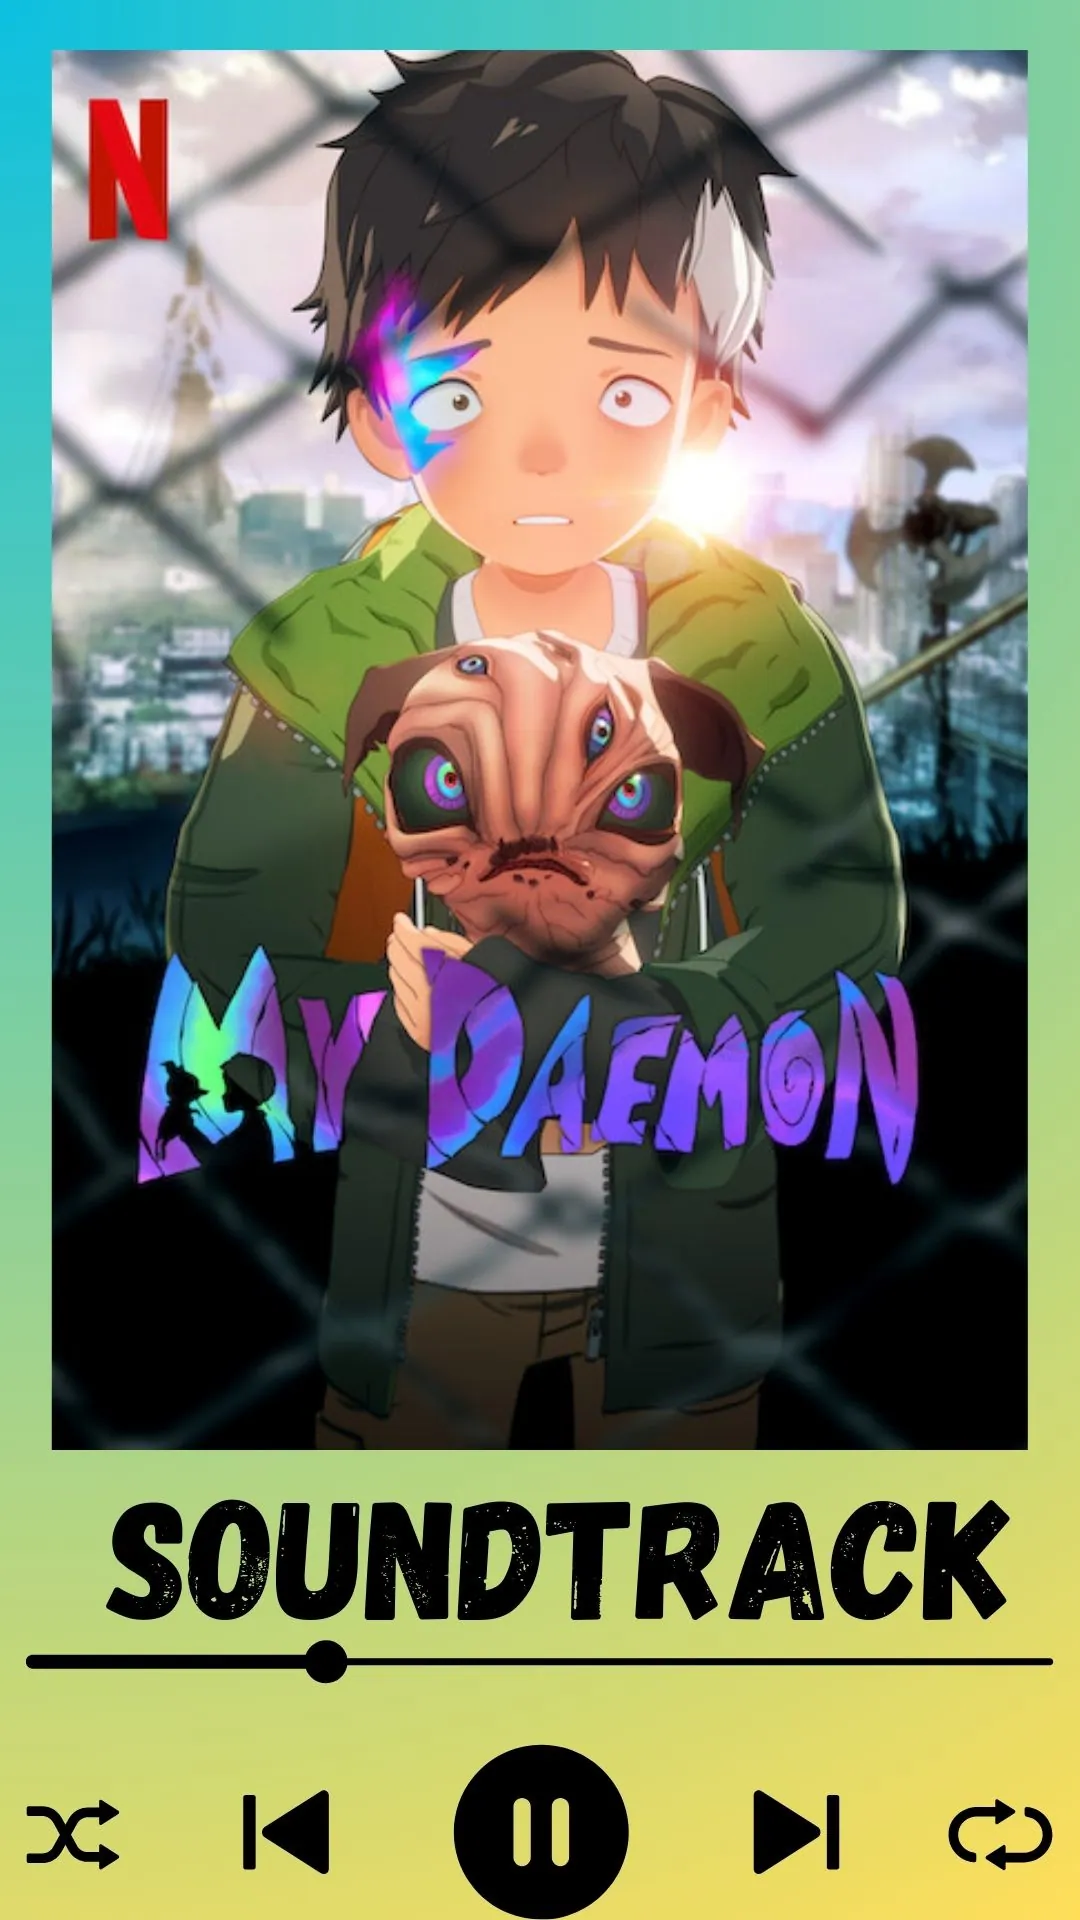 Watch My Daemon  Netflix Official Site